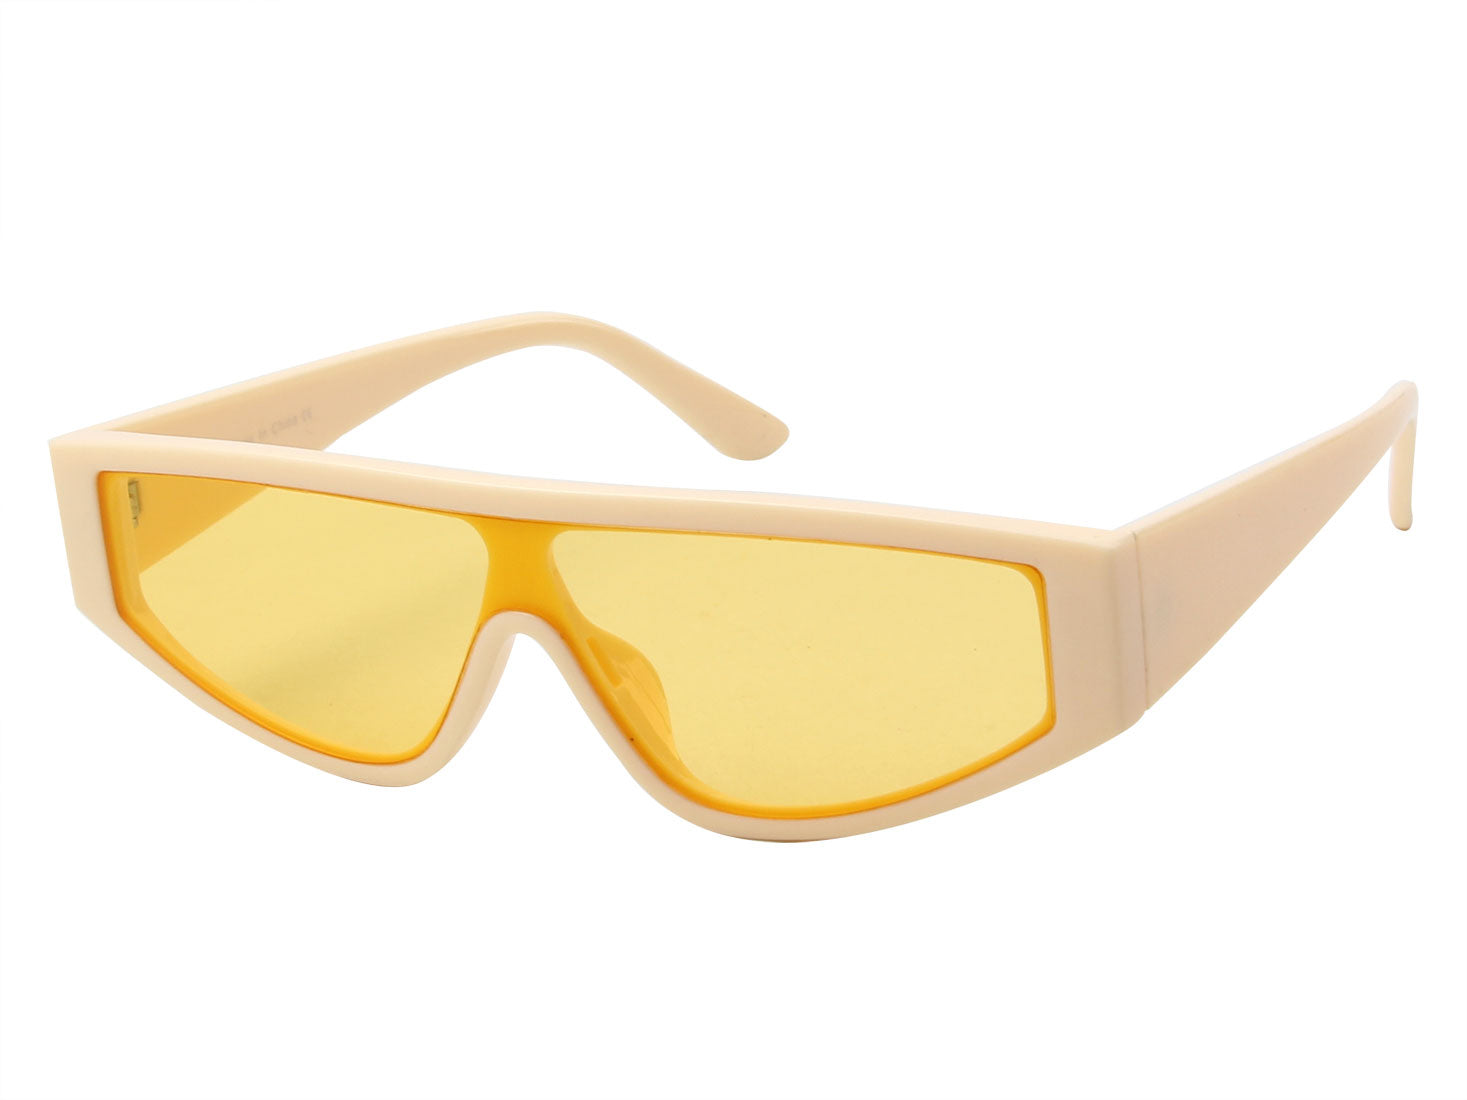 S1144 - Flat Top Rectangle Cat Eye Fashion Sunglasses - Iris Fashion Inc. | Wholesale Sunglasses and Glasses